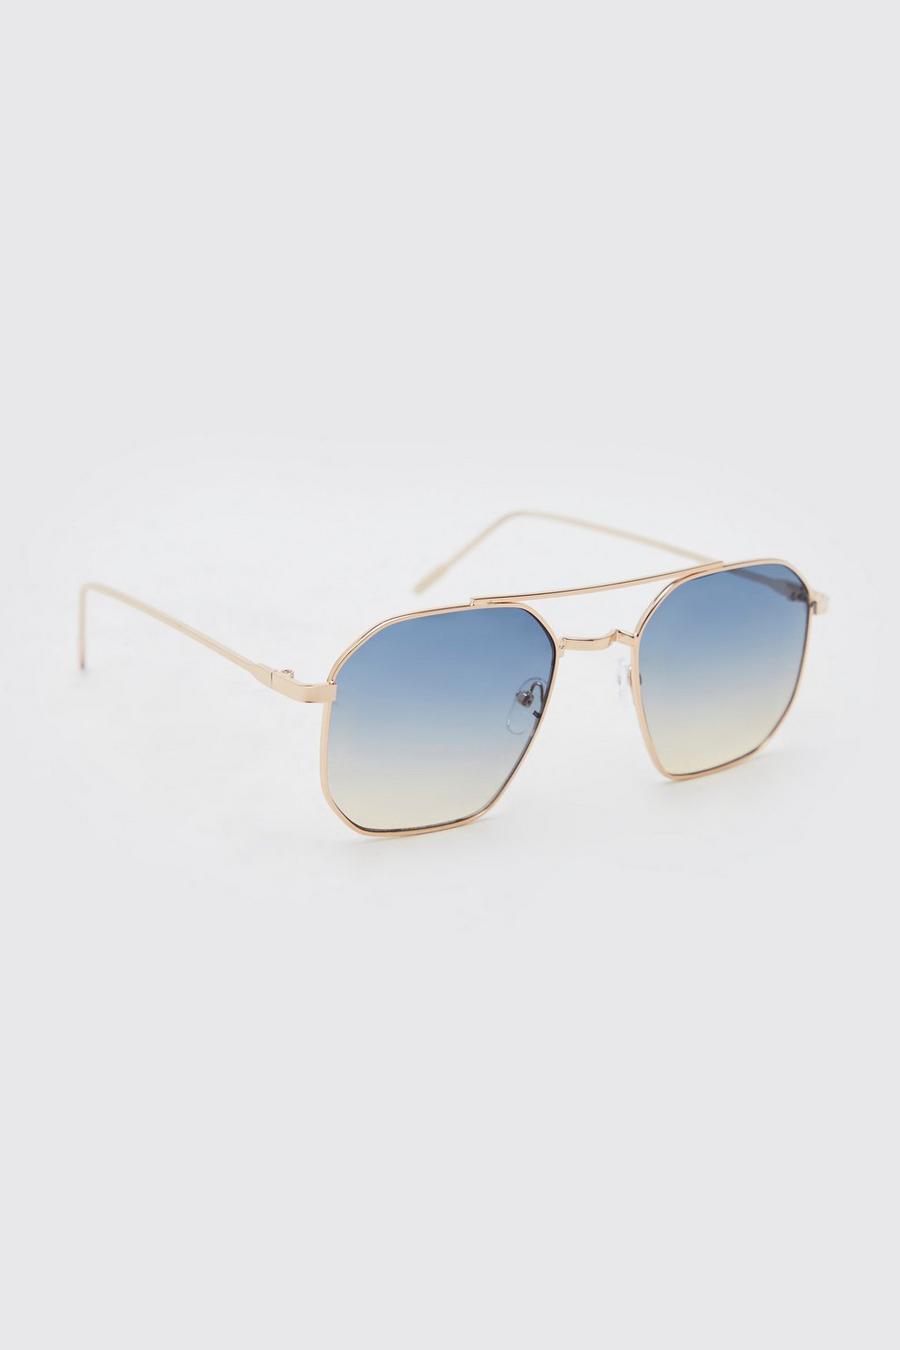 Gold metallic Sunglasses BOSS 1446 S Black 003